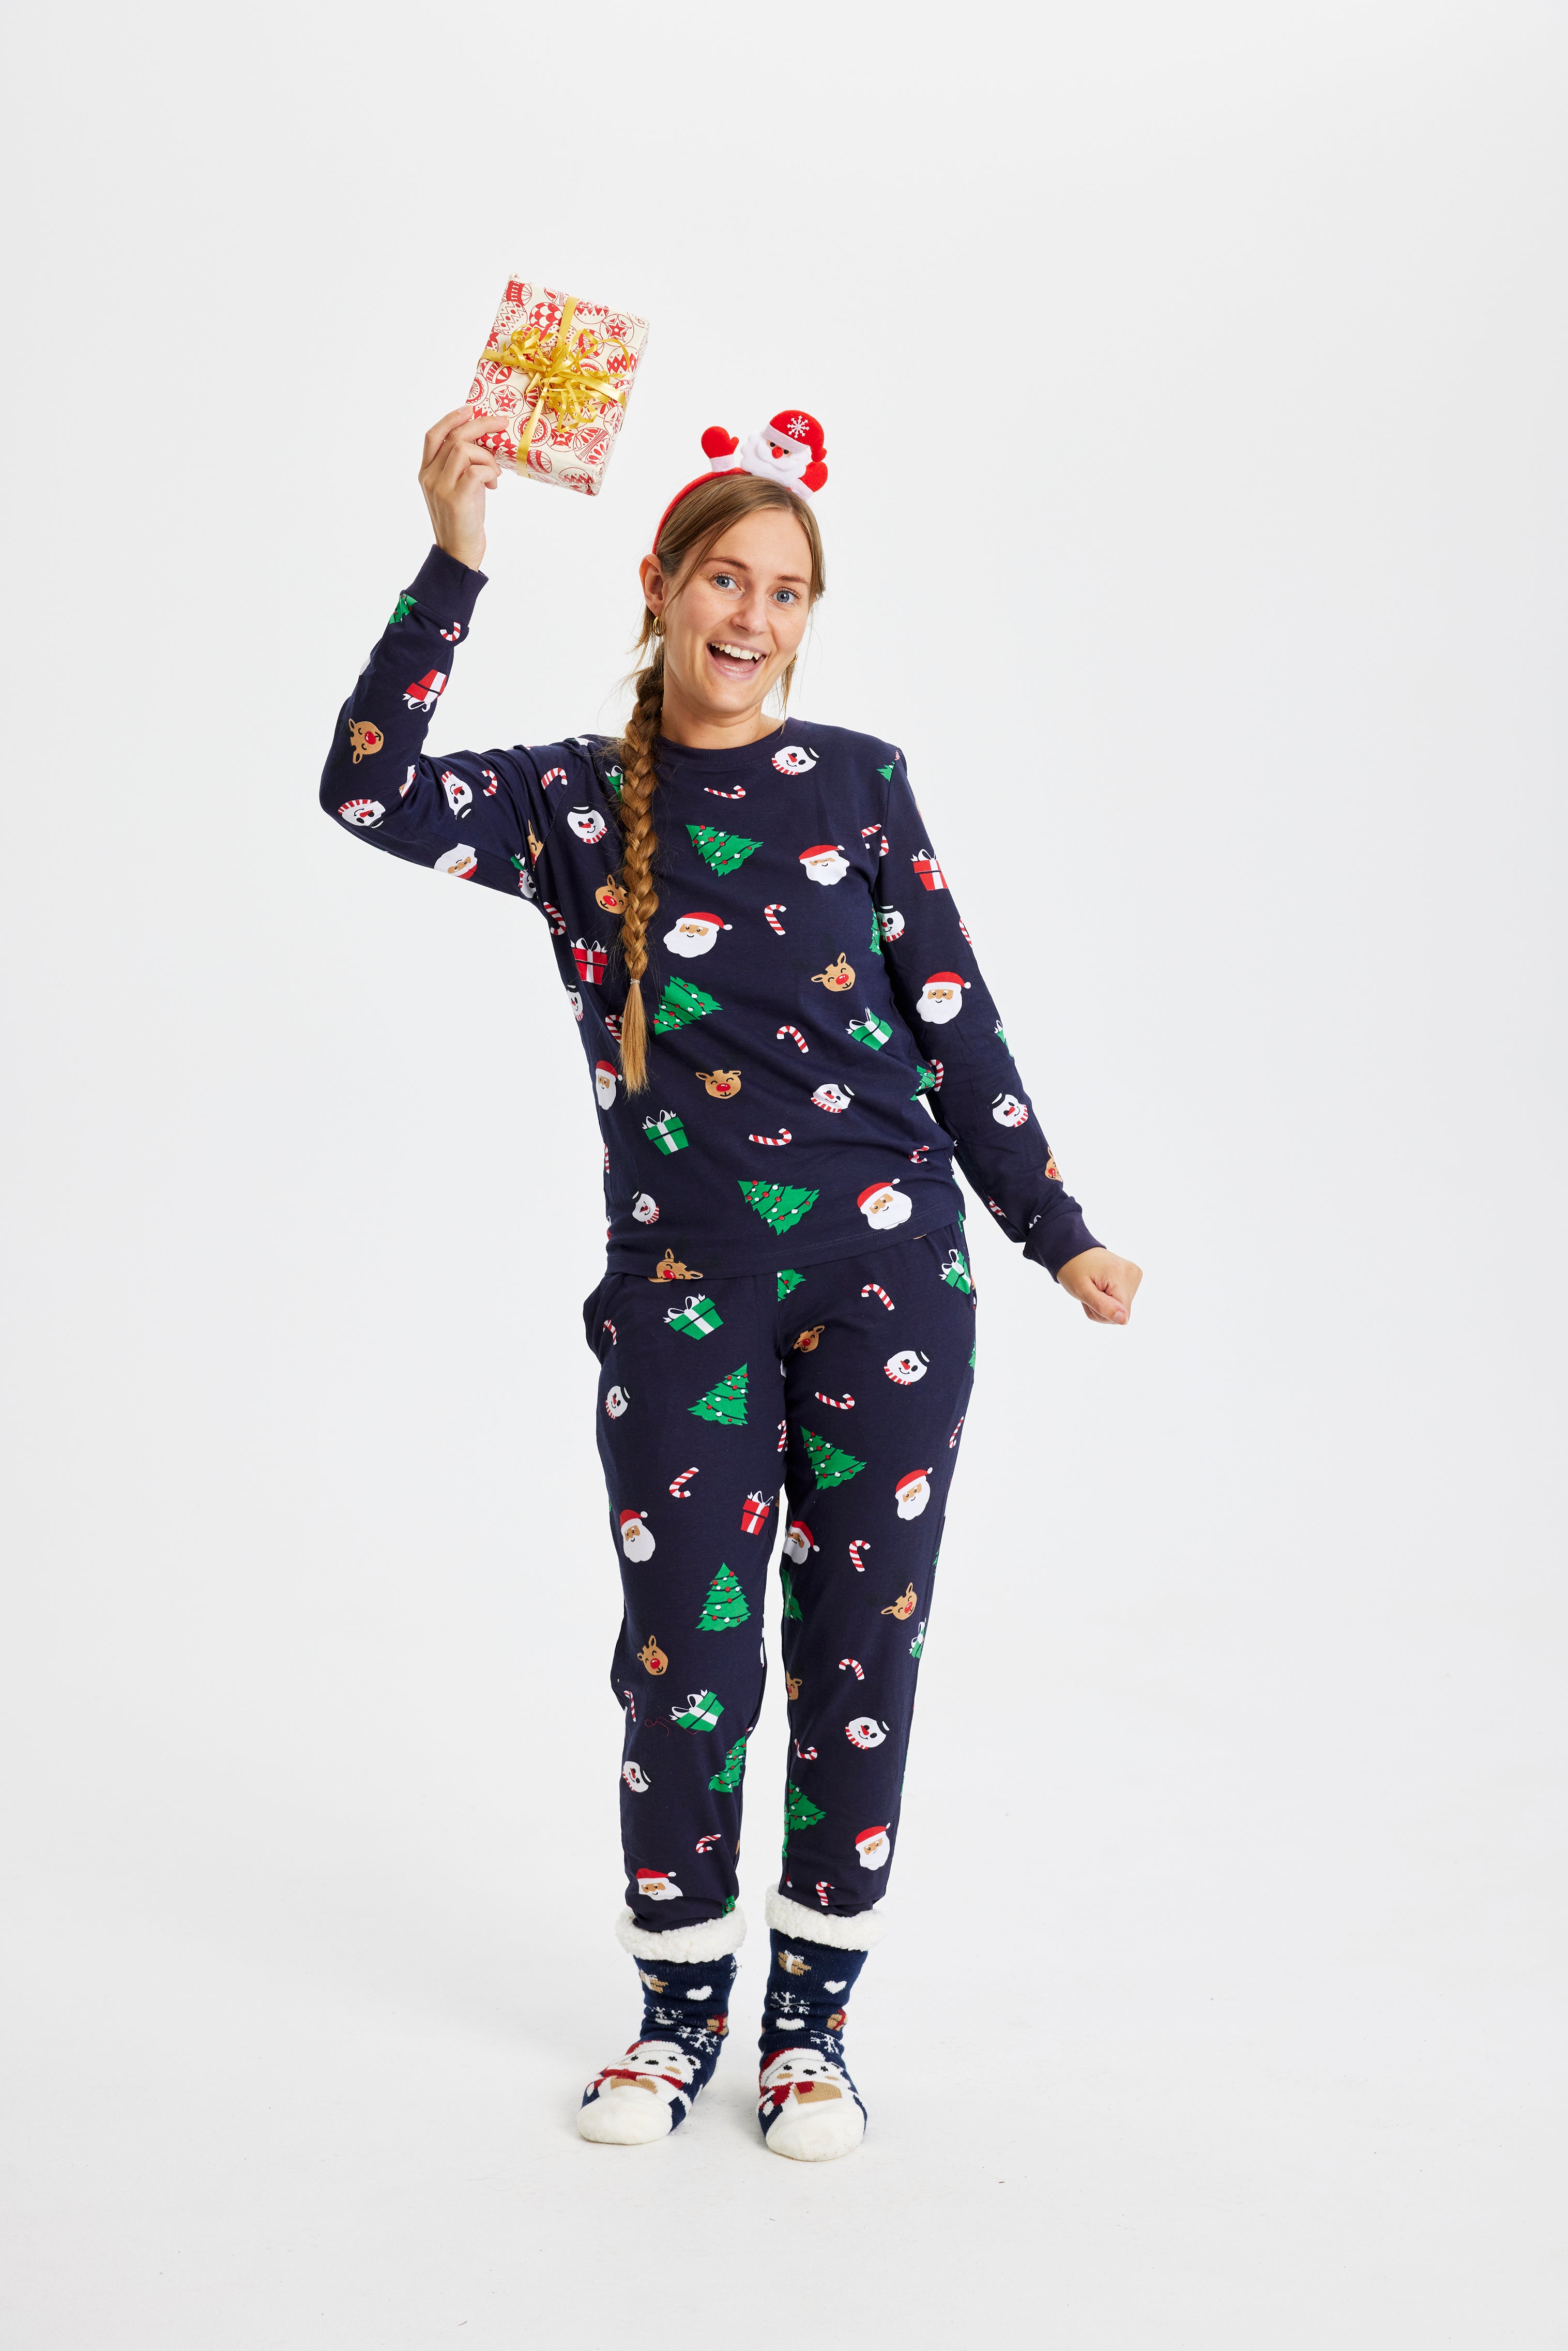 Billede af Årets julepyjamas: Christmas Cute Pyjamas - dame / kvinder.